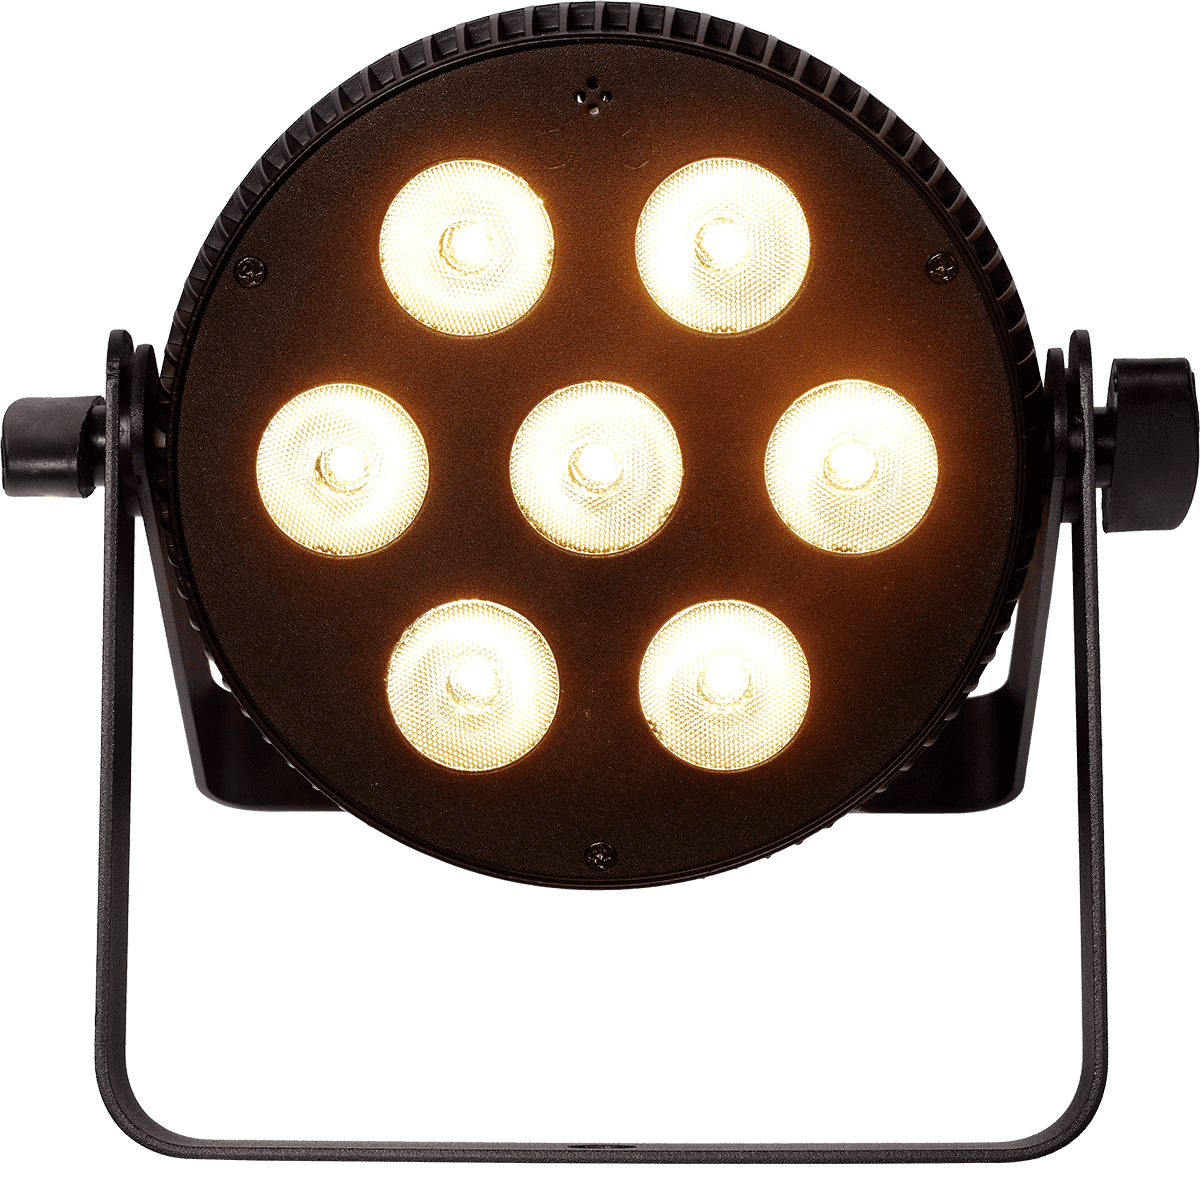 Algam Lighting - Slimpar 710 HEX